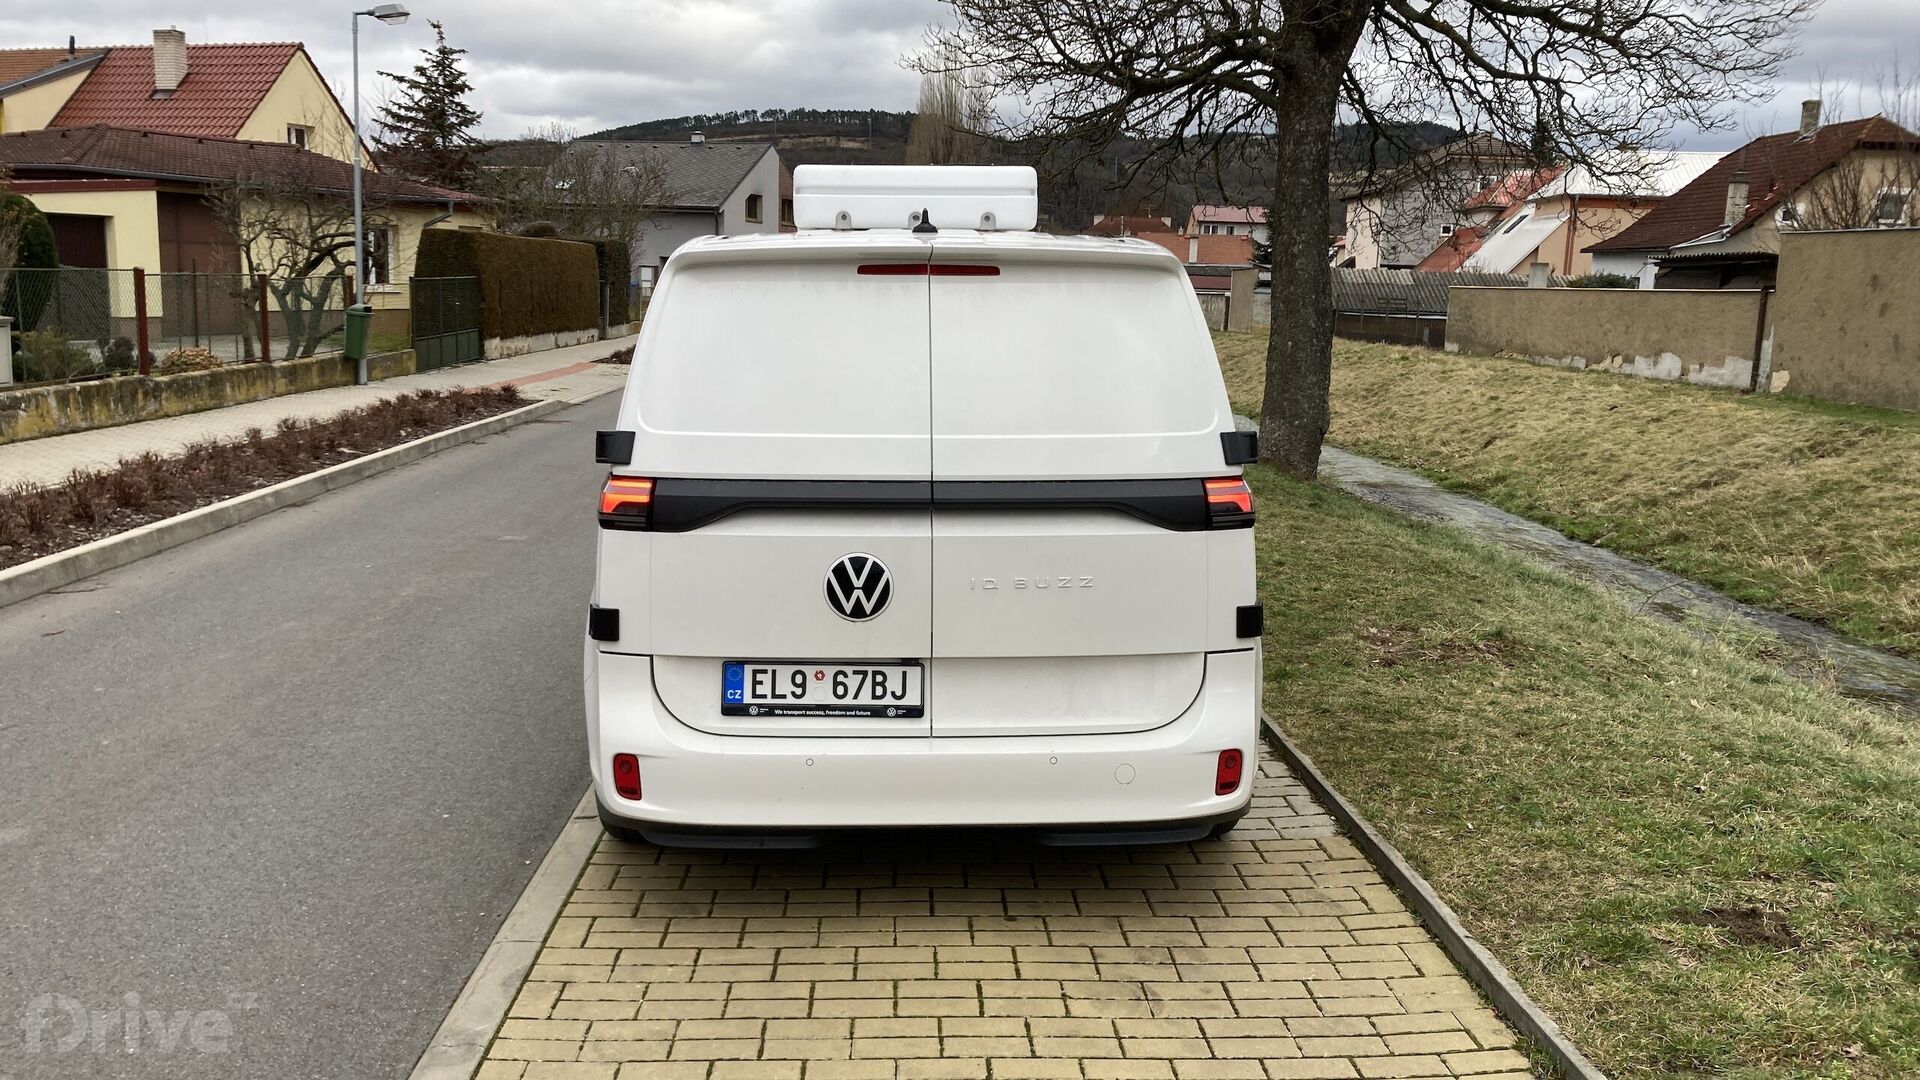 Volkswagen ID. Buzz Cargo s chladírenskou vestavbou Carrier